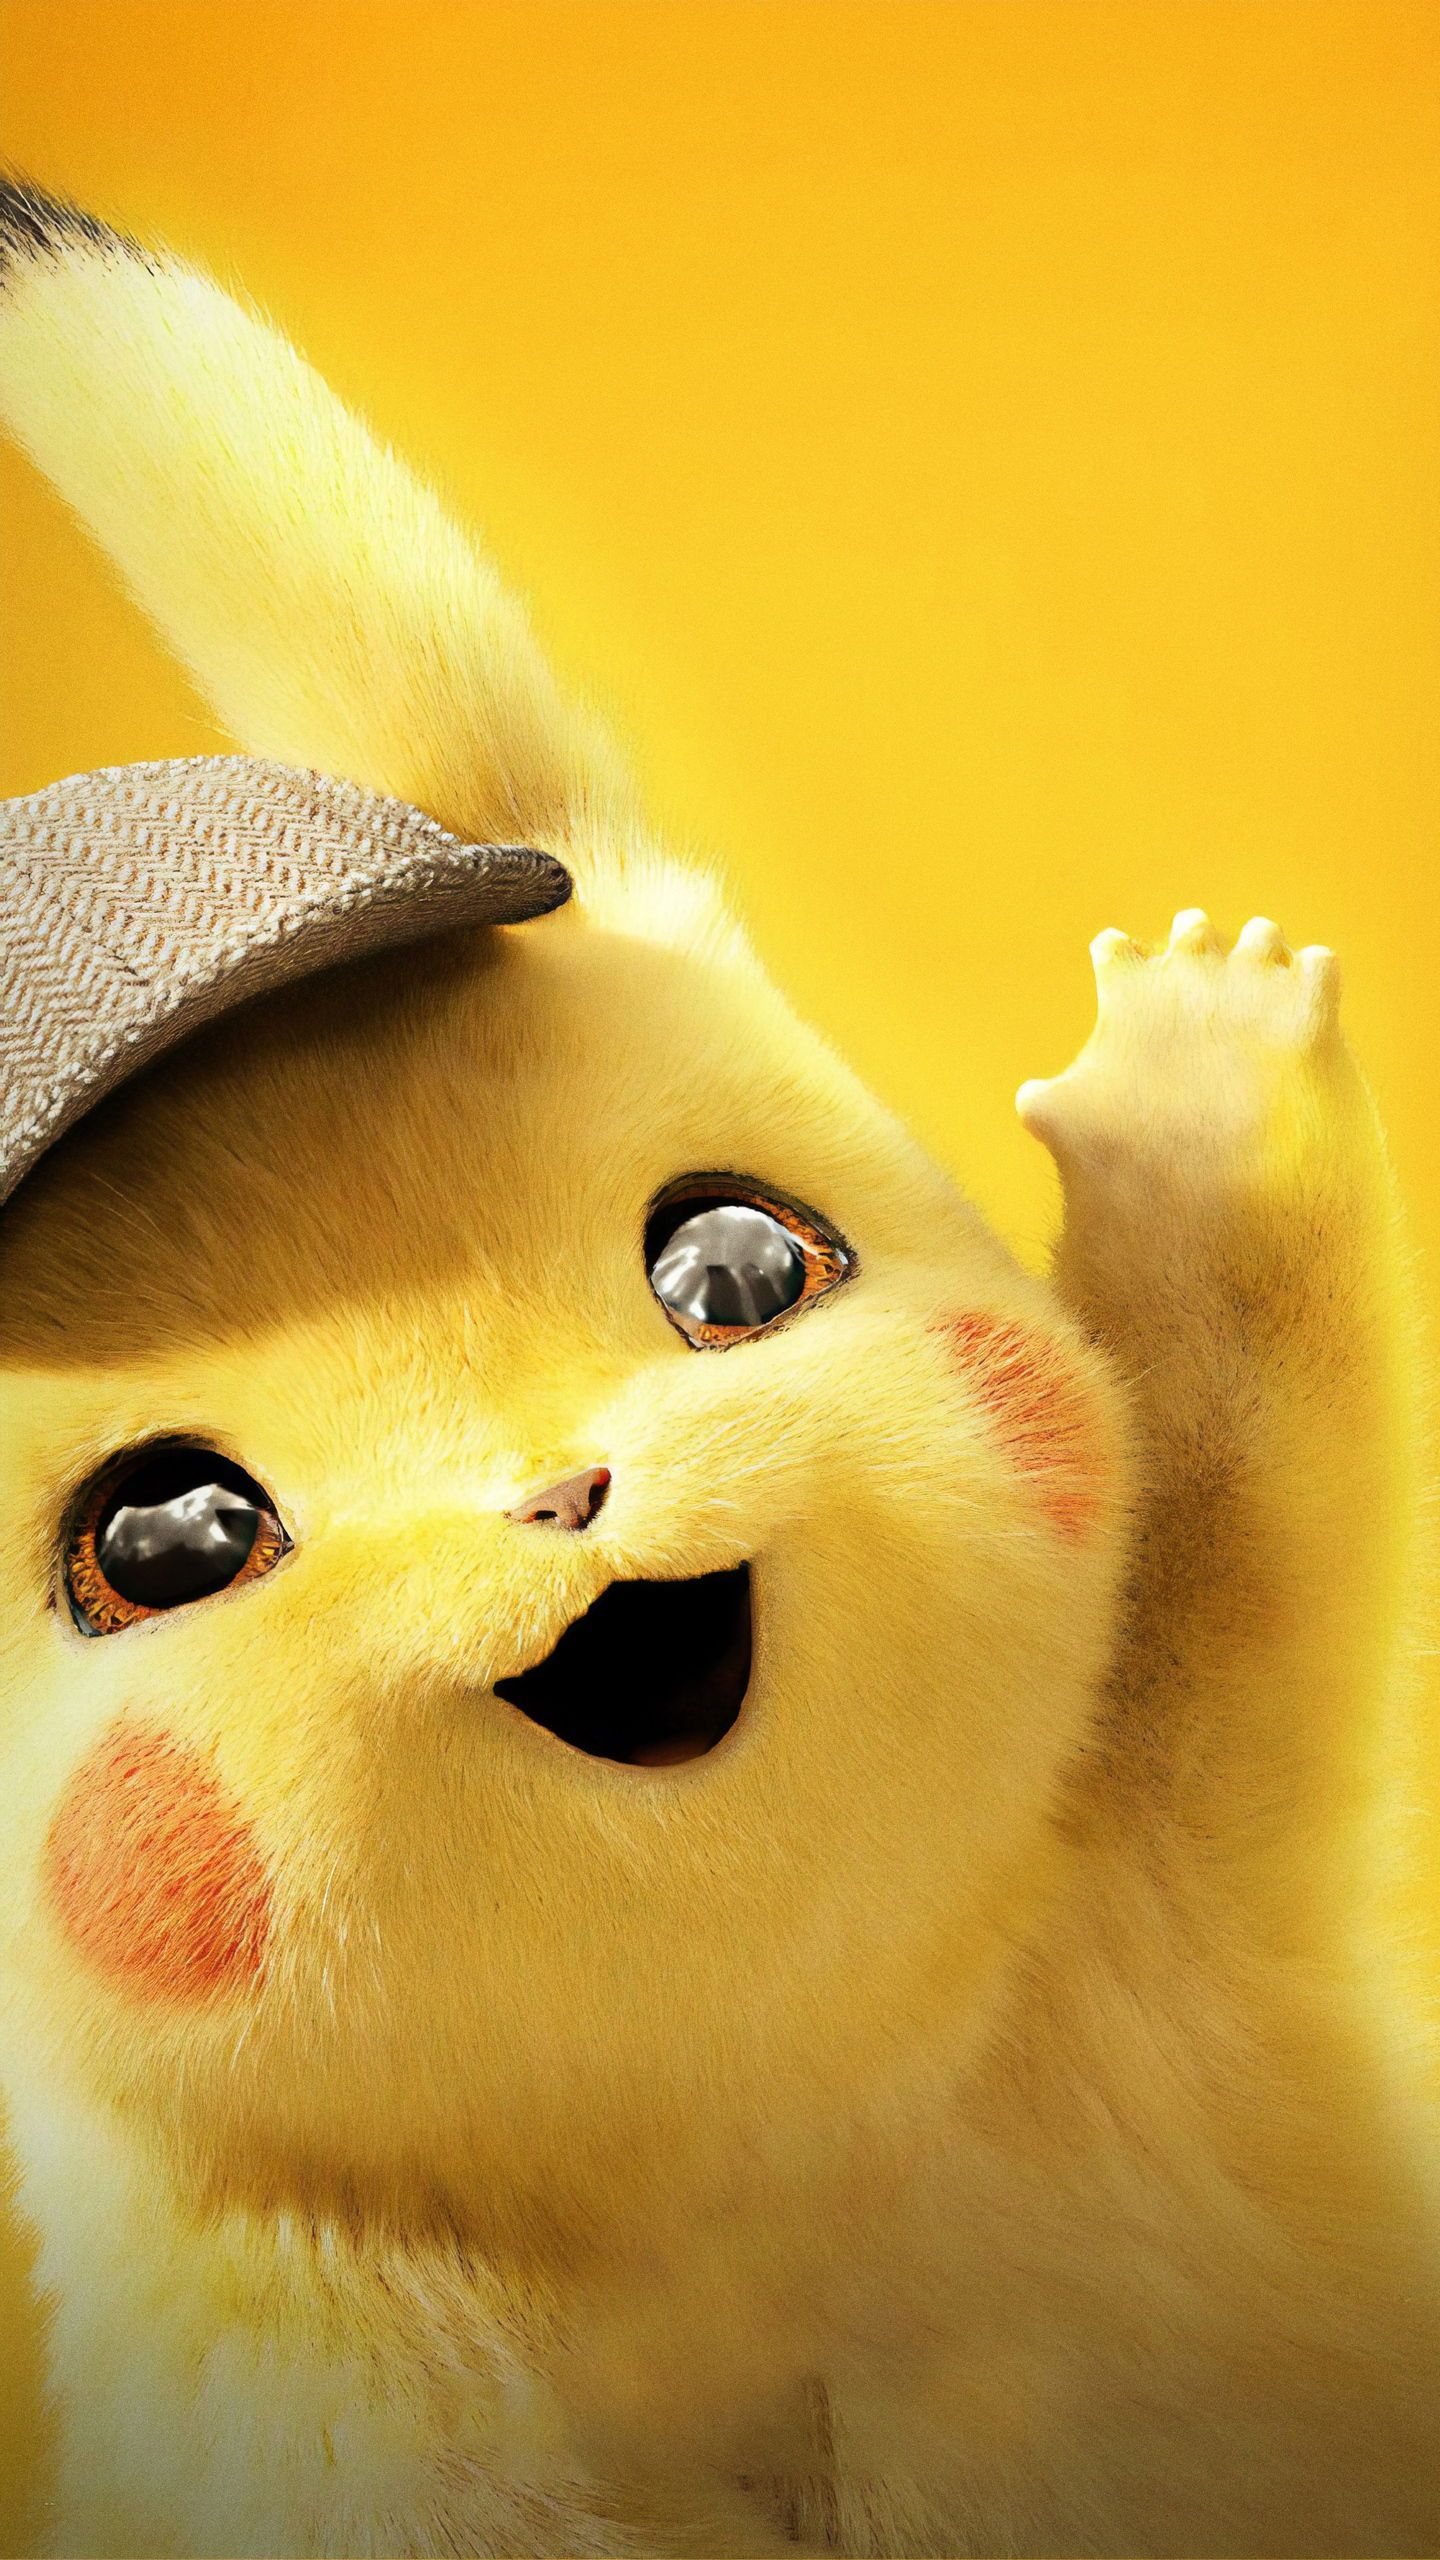 Download HD Wallpaper. Pikachu art, Pikachu wallpaper, Cute pikachu